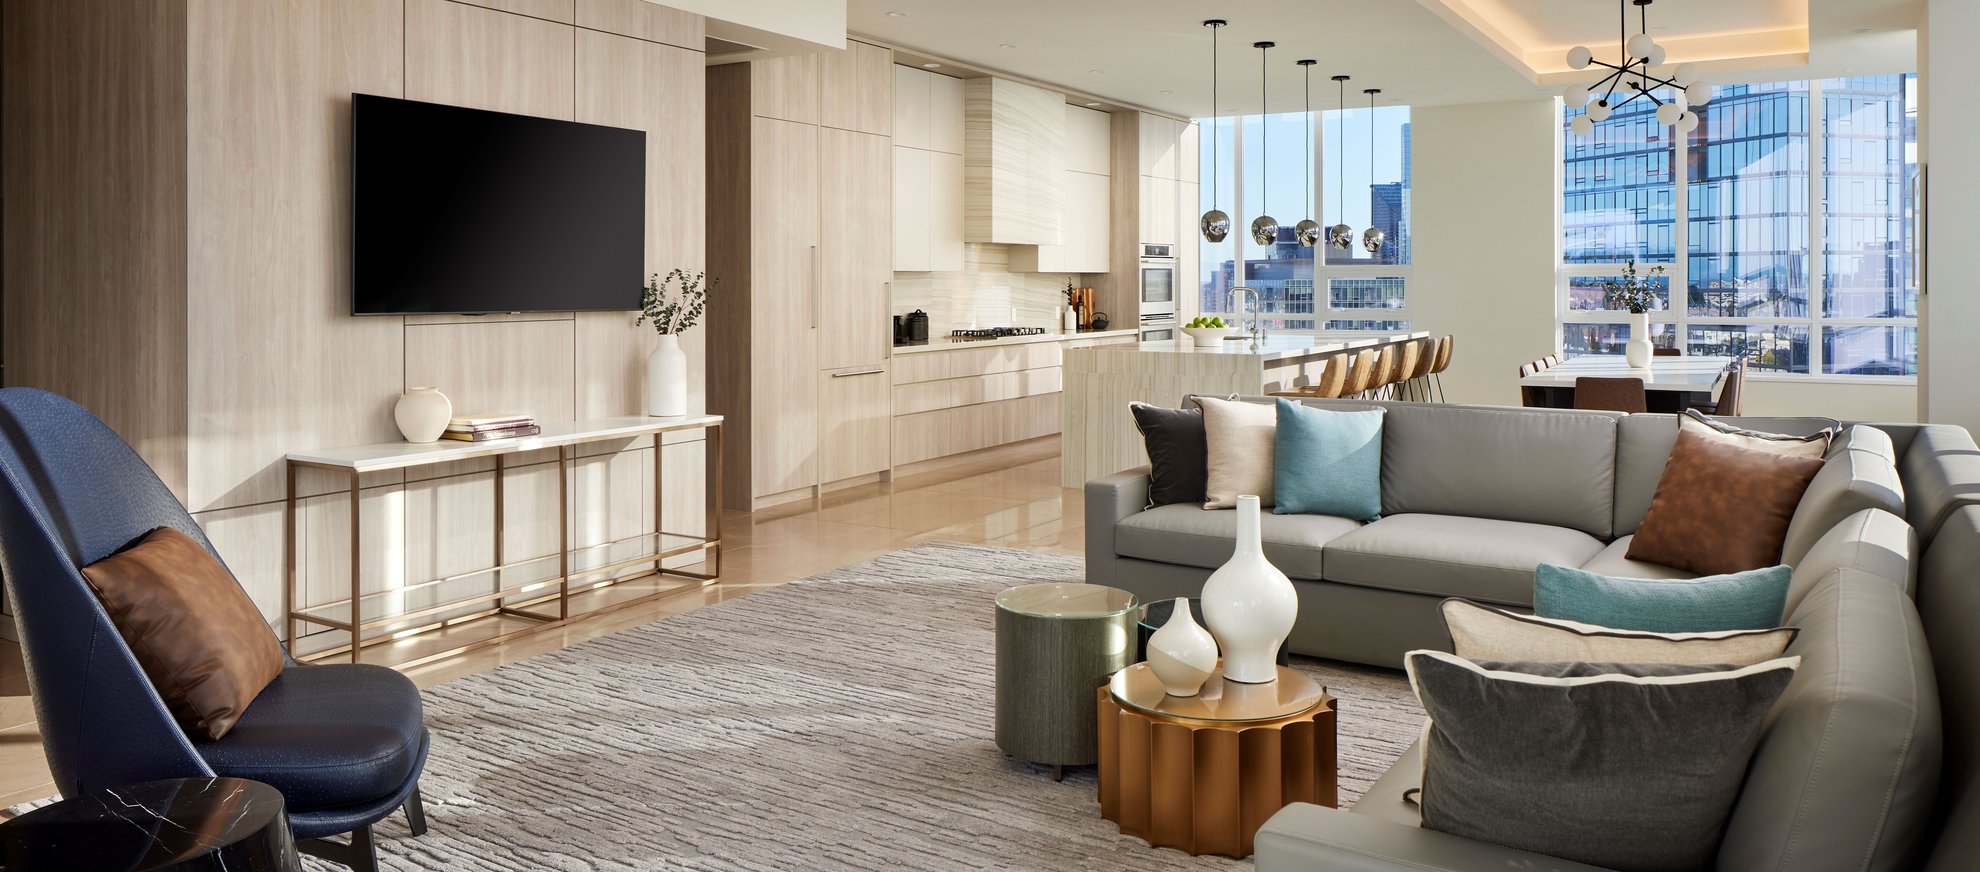 spacious living room features sofa, flat screen tv, modern design at level oslu the penthouse seattle.jpg